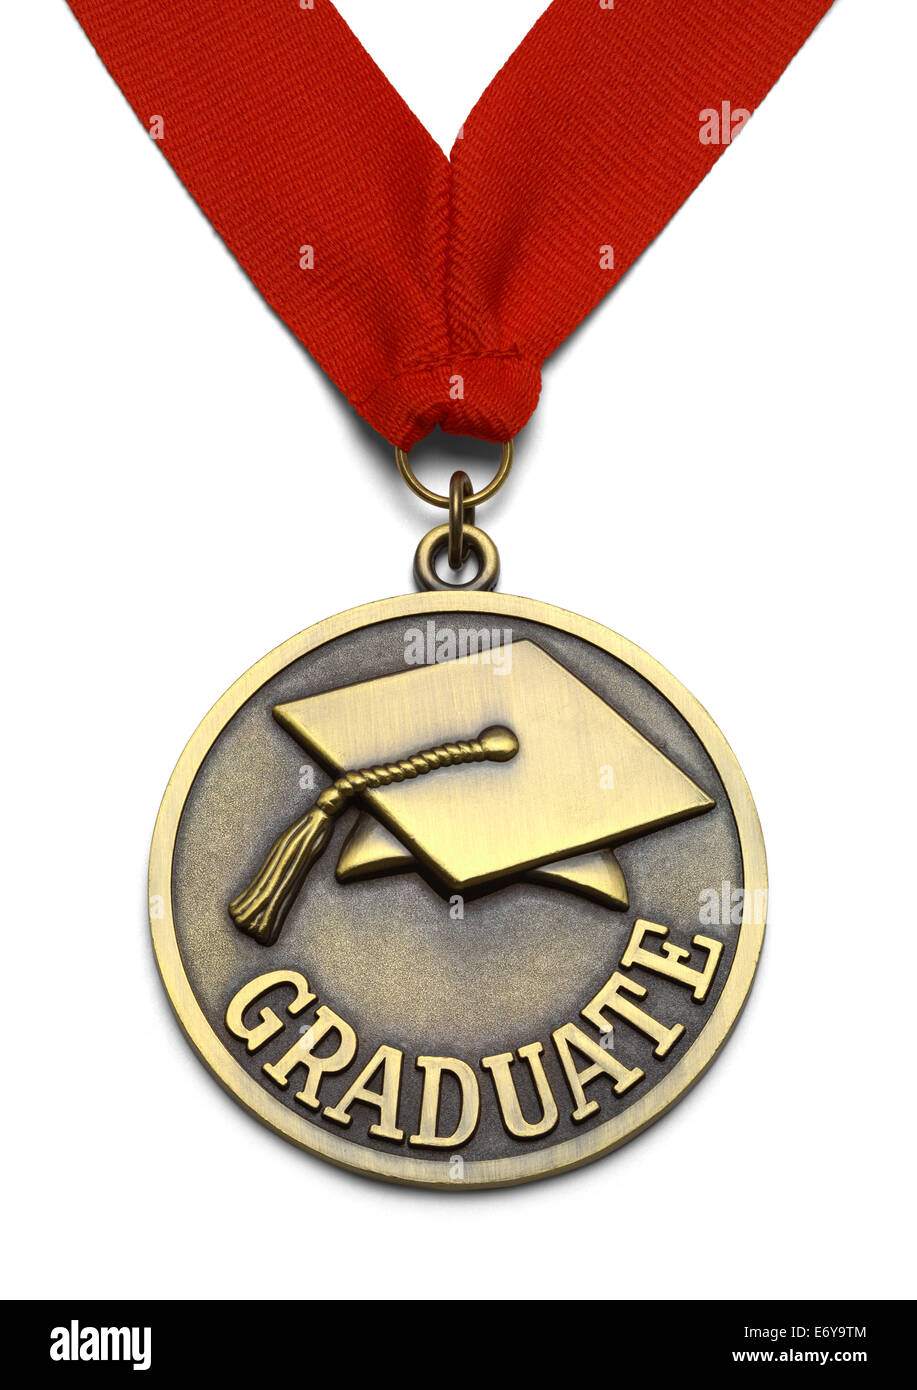 Graduate Goldmedaille mit rotem Band, Isolated on White Background. Stockfoto